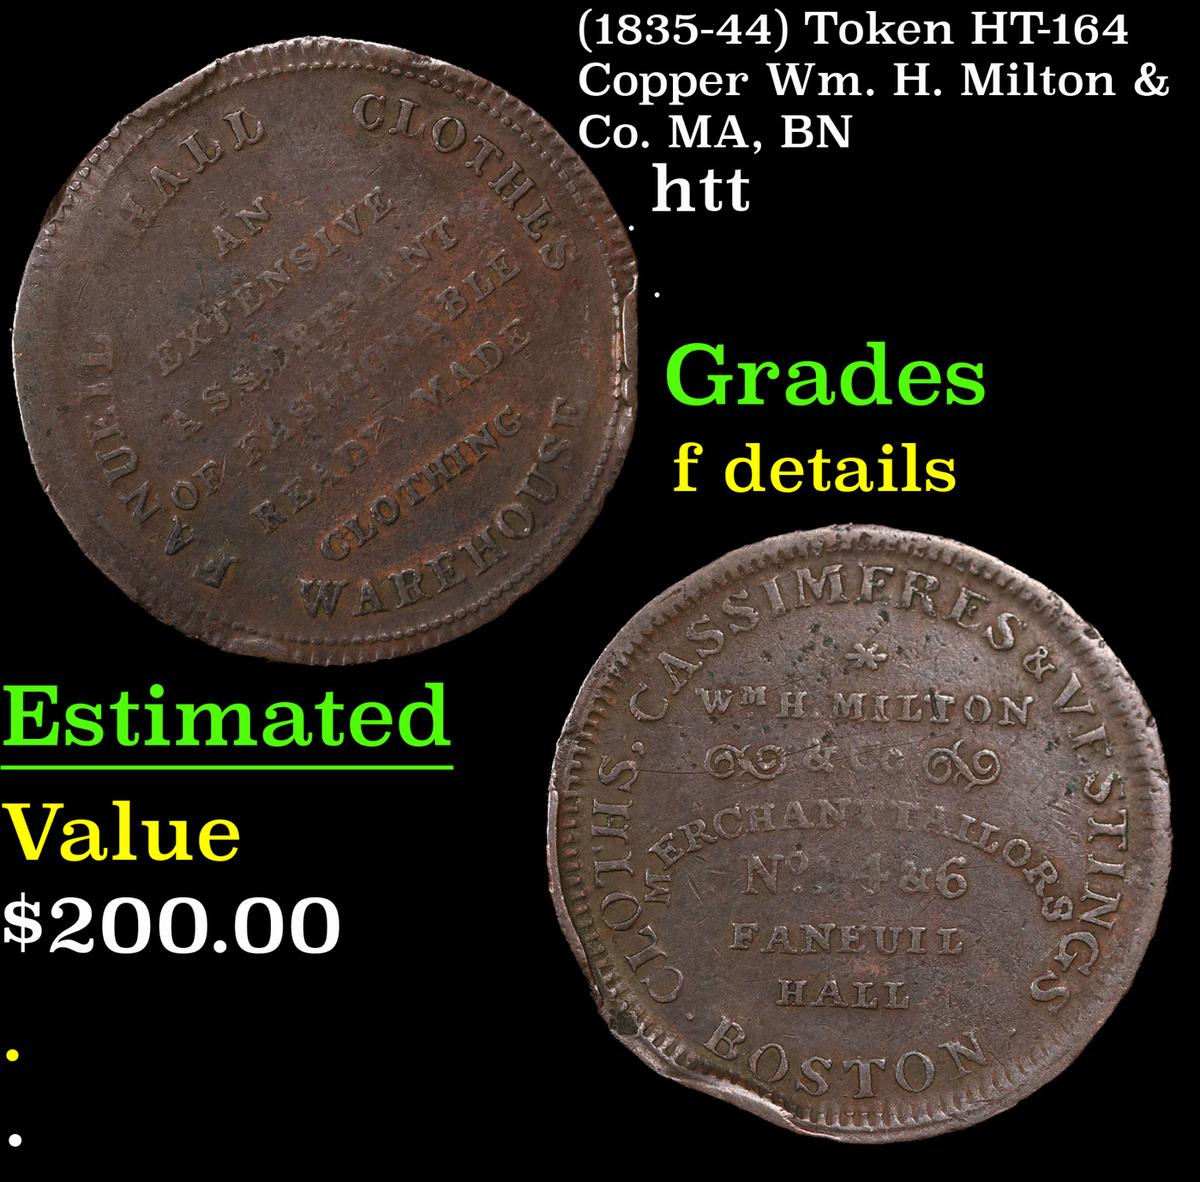 (1835-44) Token HT-164 Copper Wm. H. Milton & Co. MA, BN Hard Times Token 1c Grades f details